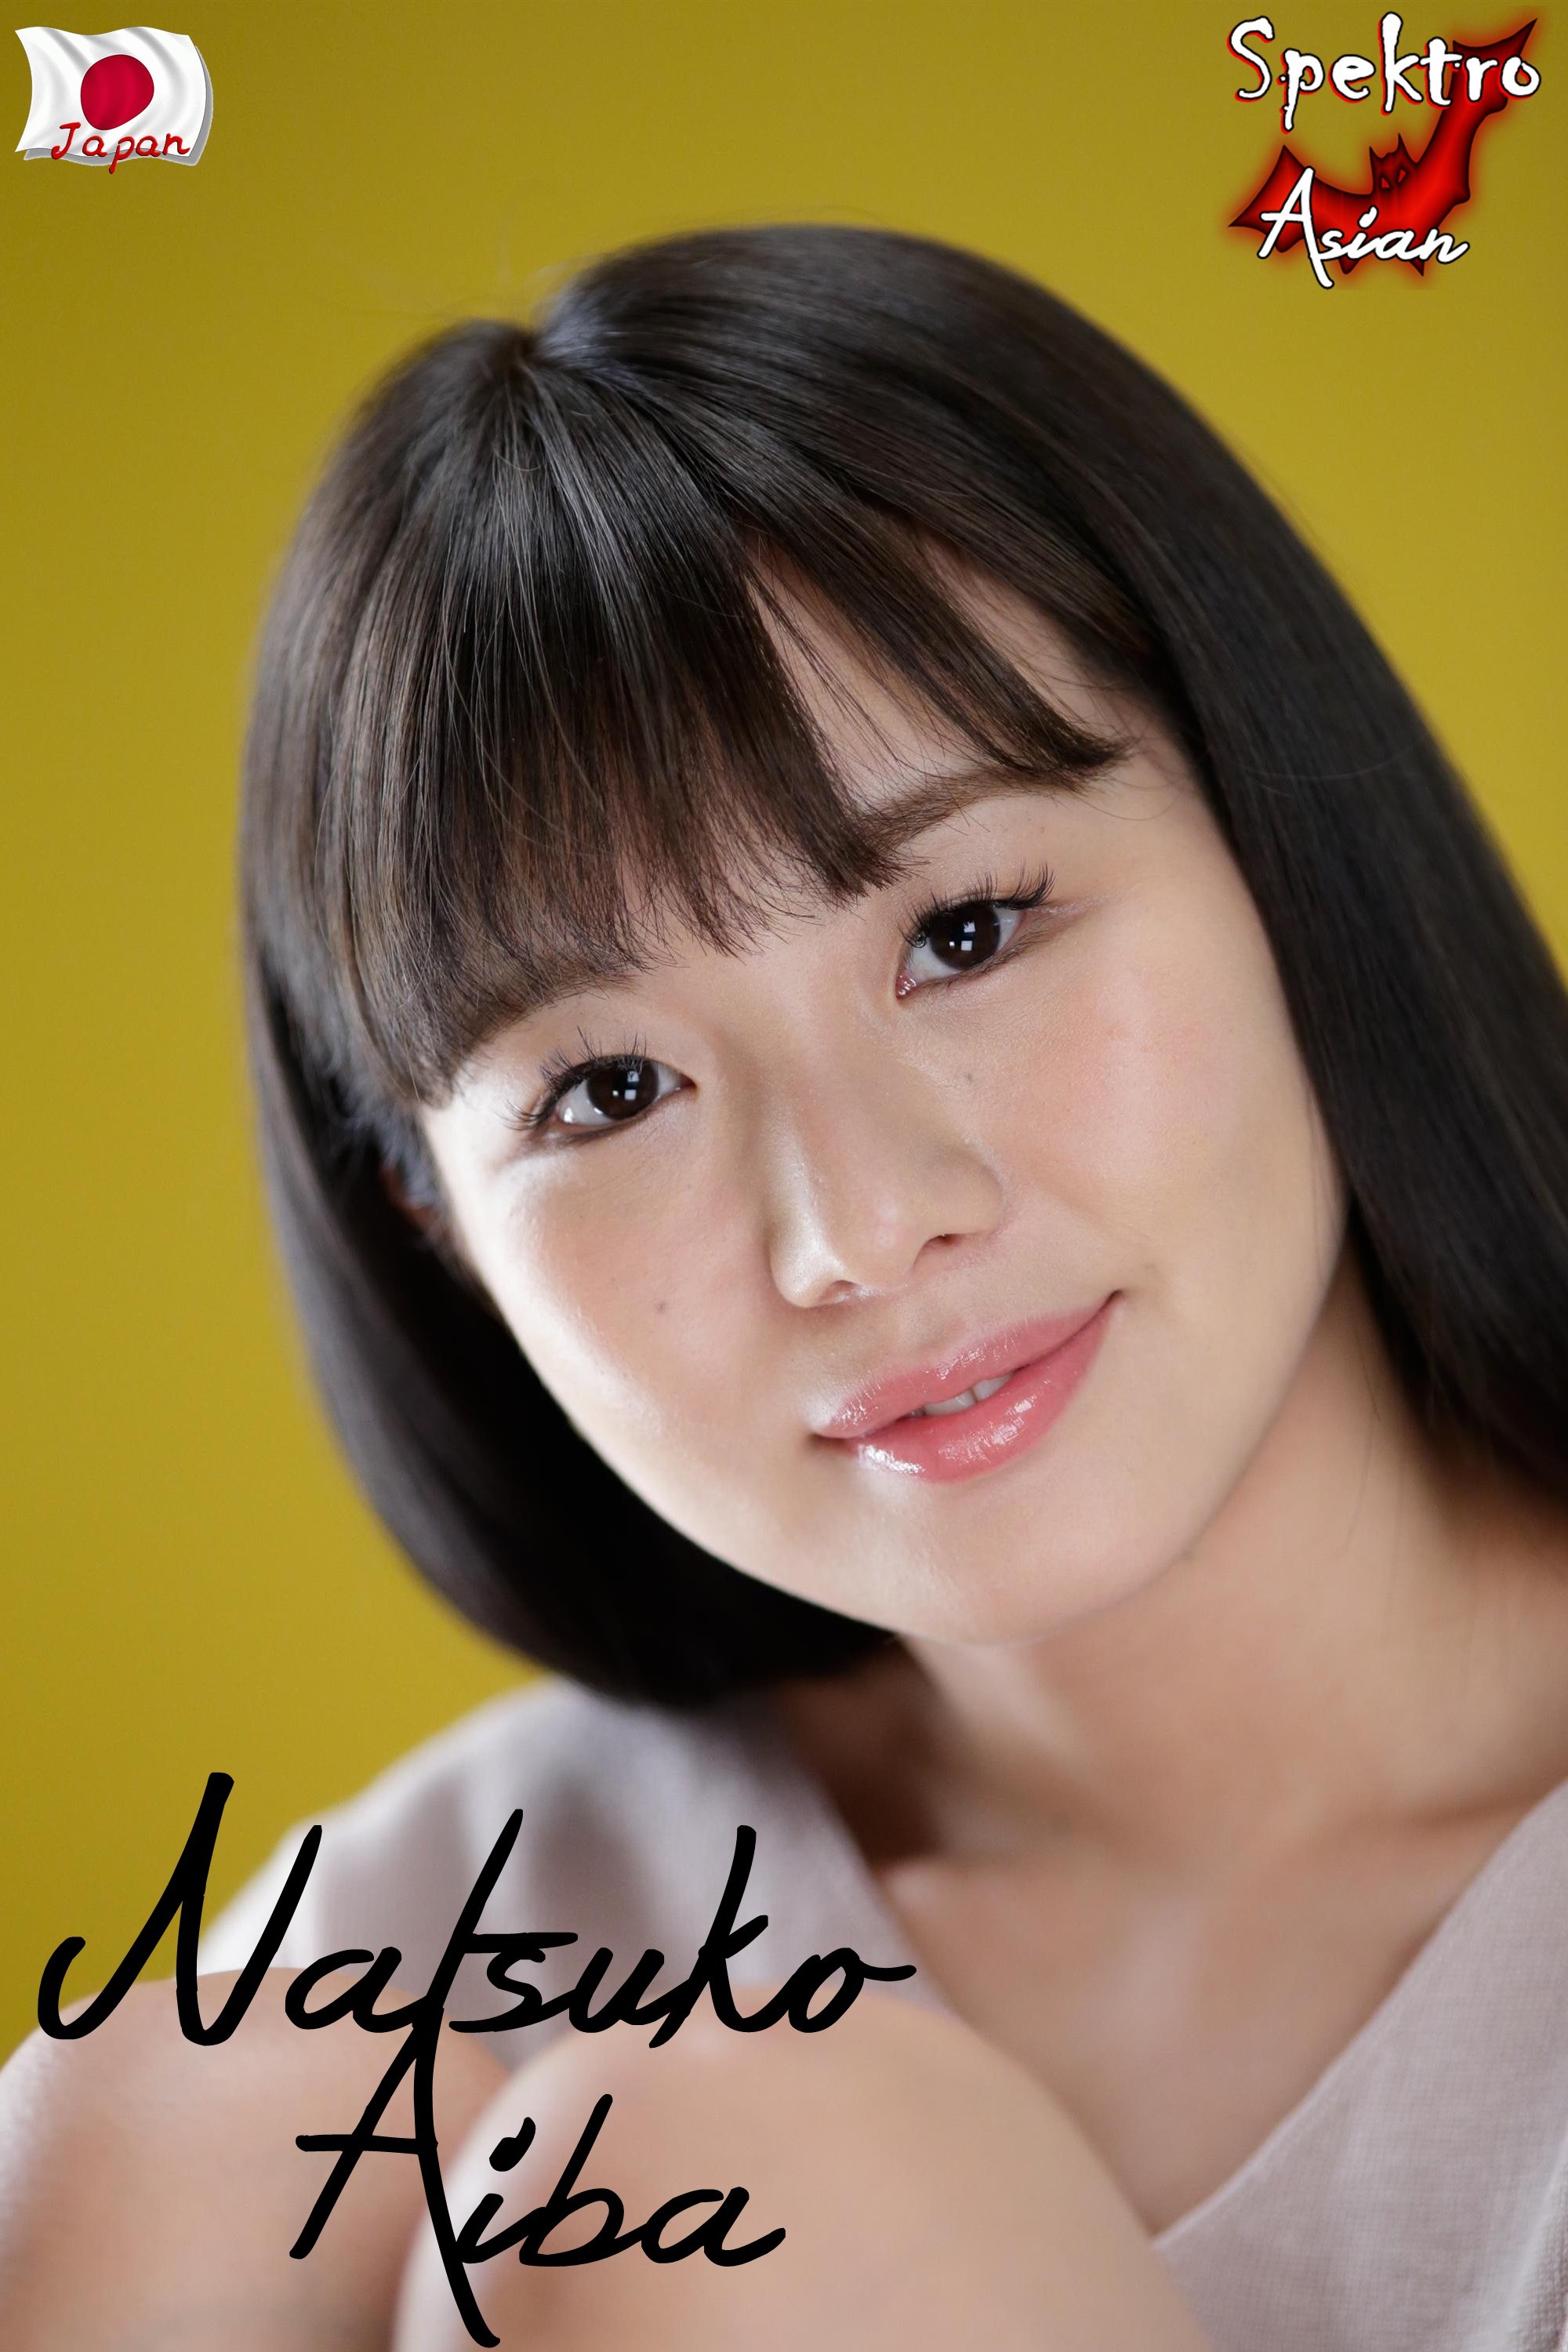 7313946 main Asian Girls Natsuko Aiba Set 01 By Spektro Natsuko Aiba 01 Asian Girls 001